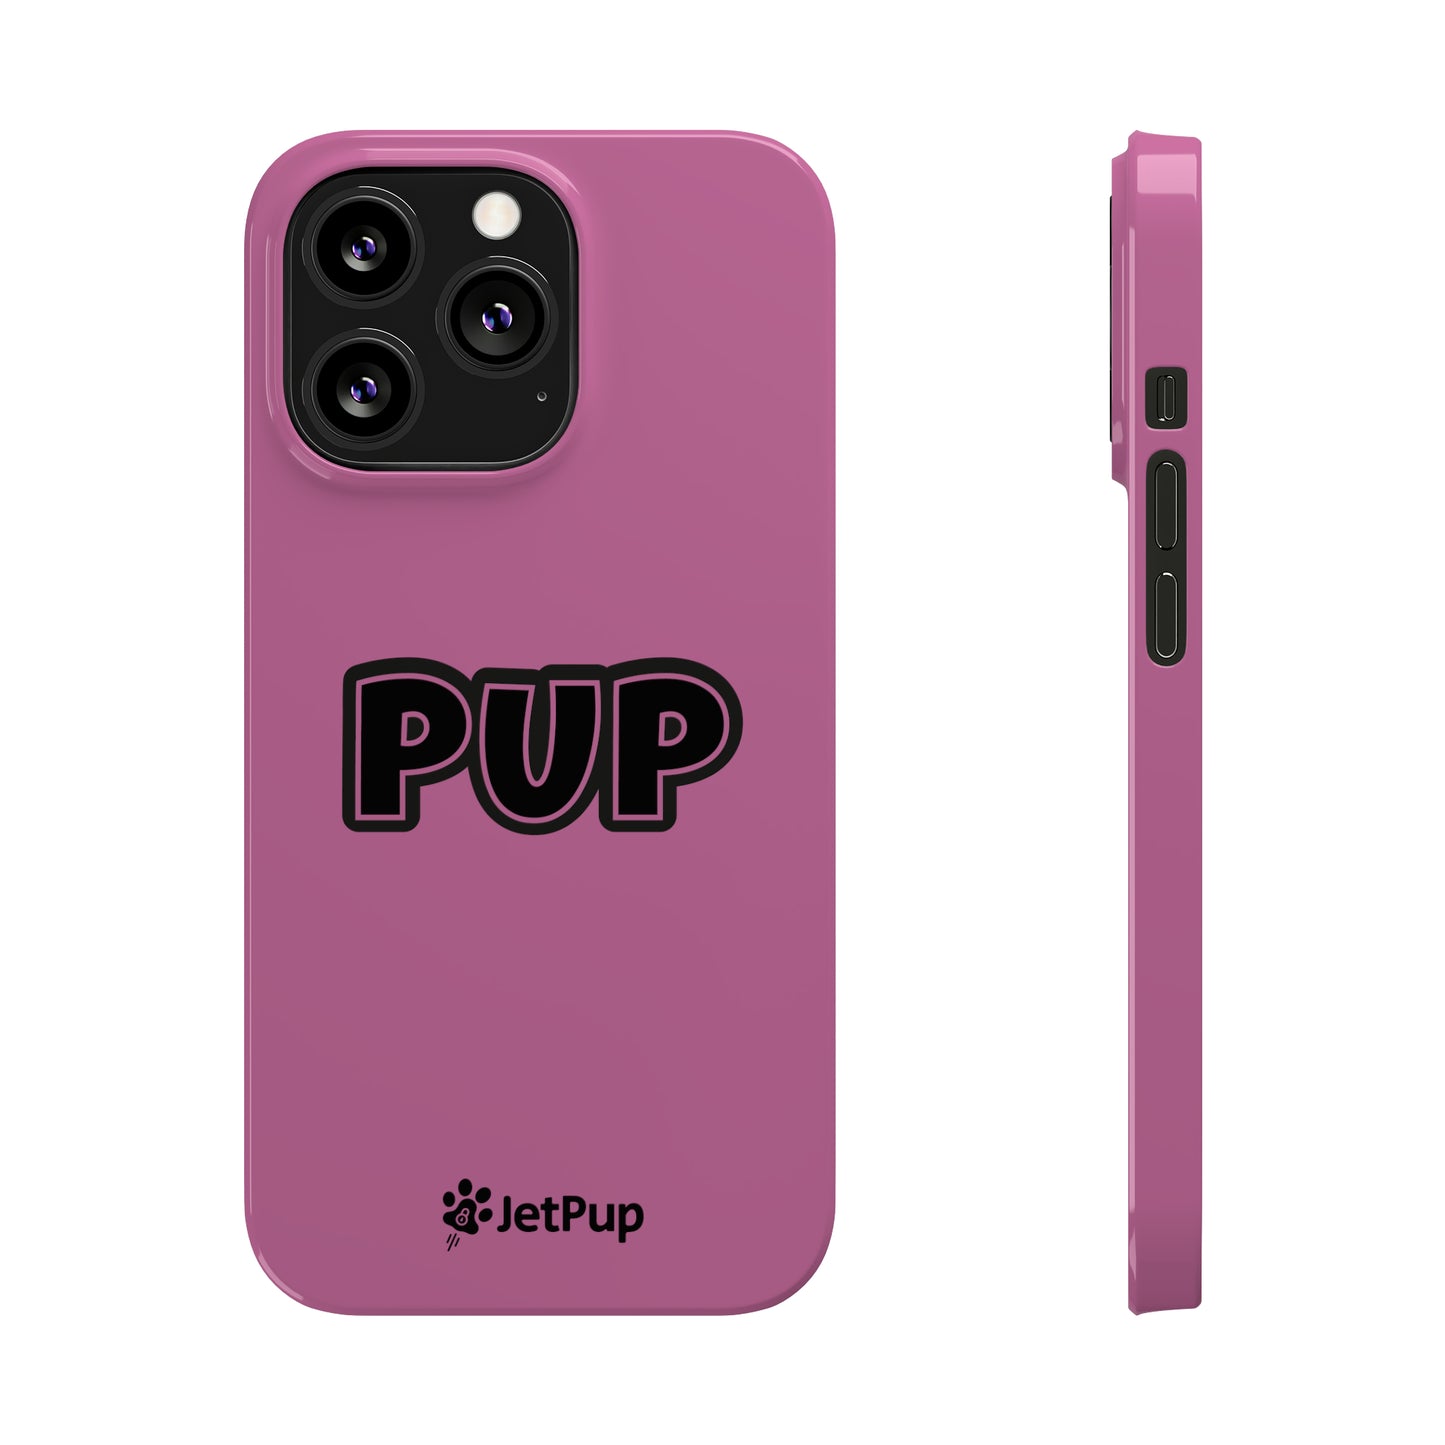 Pup Slim iPhone Cases - Pink